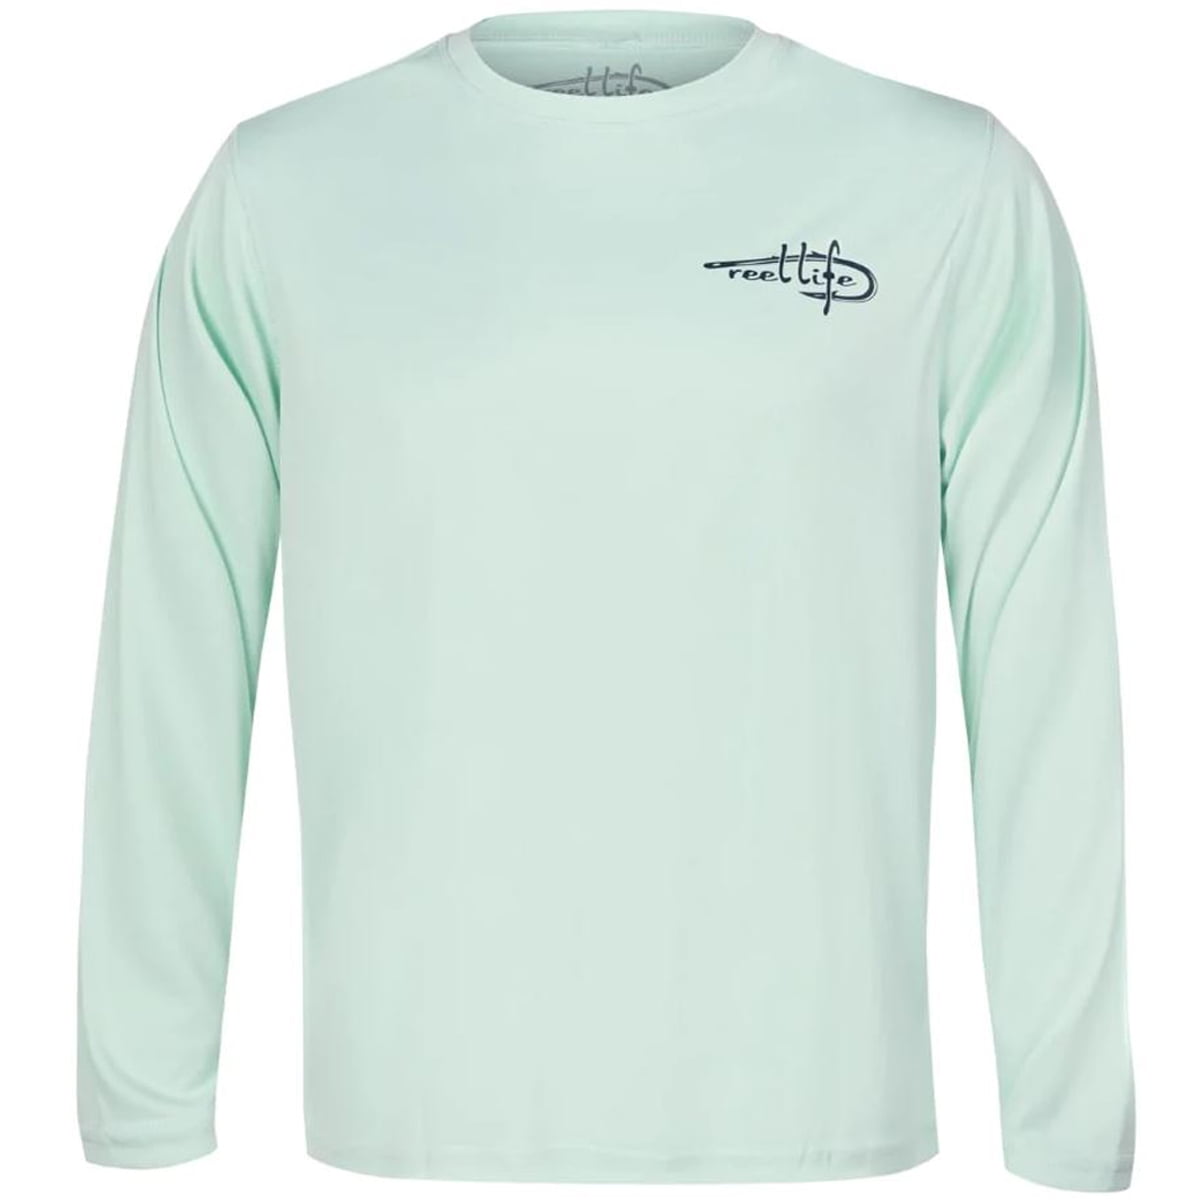 Reel Life Color Splash Sail UV Long Sleeve T-Shirt - Medium - Misty Jade